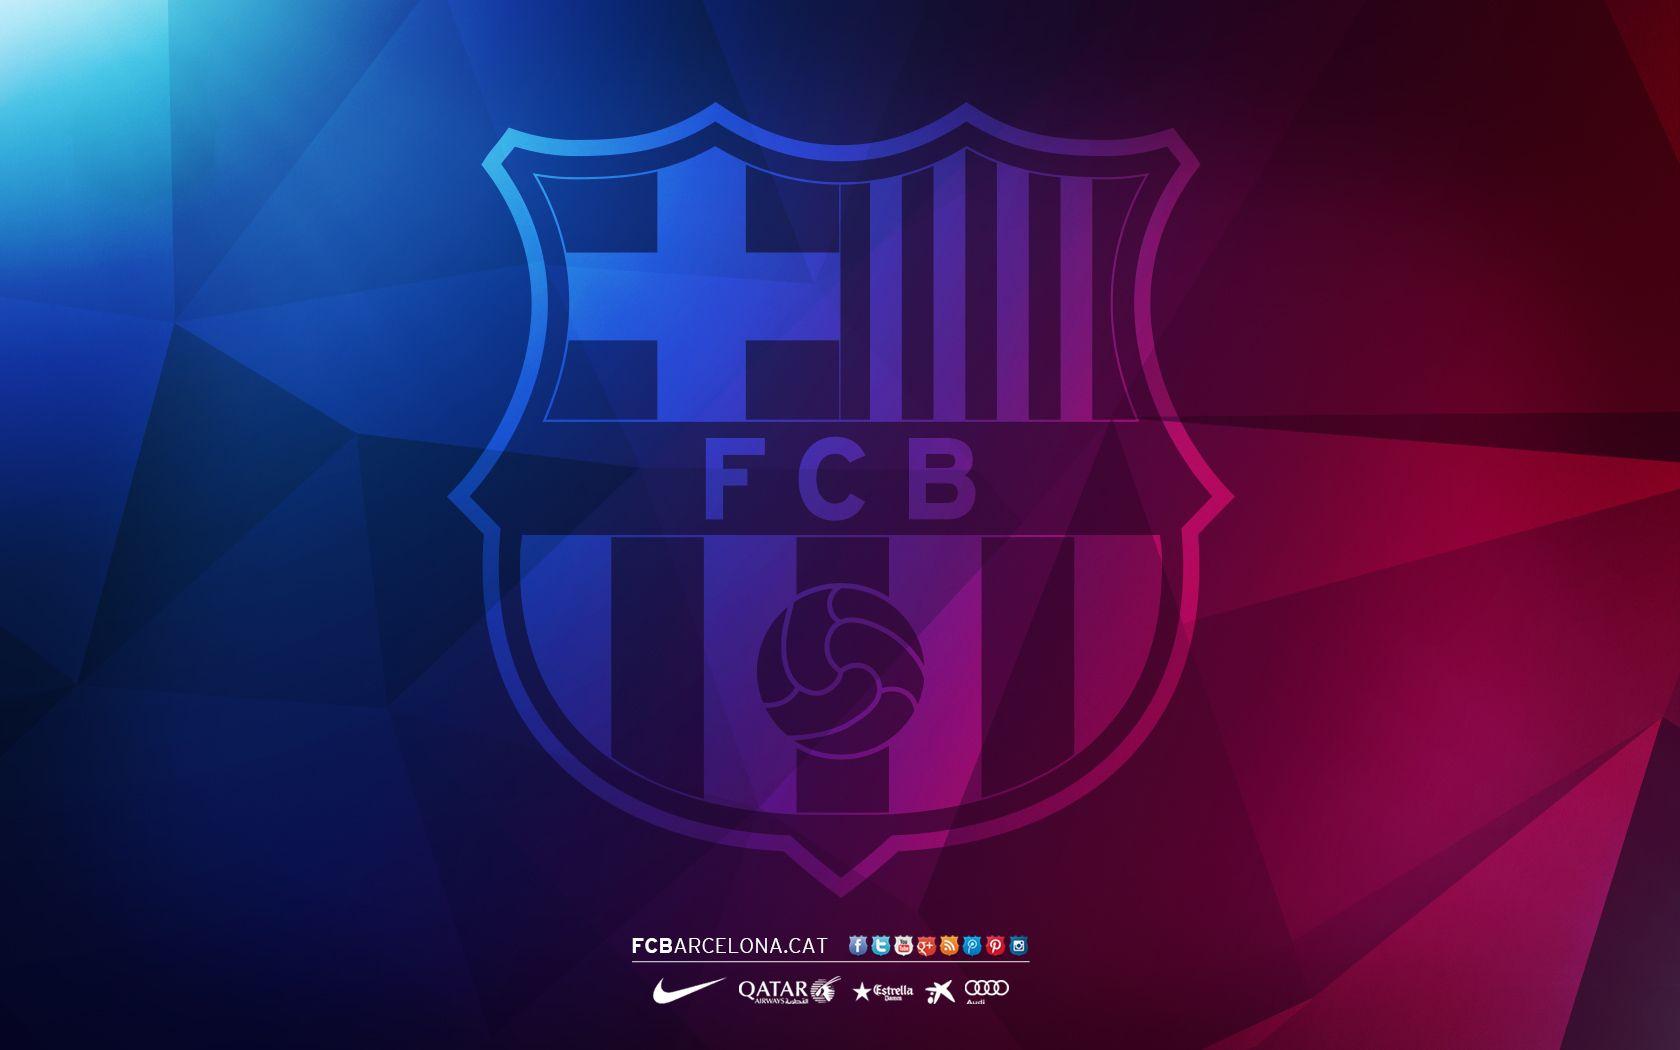 Samba Credit Cards. Official Barcelona Football Club partner